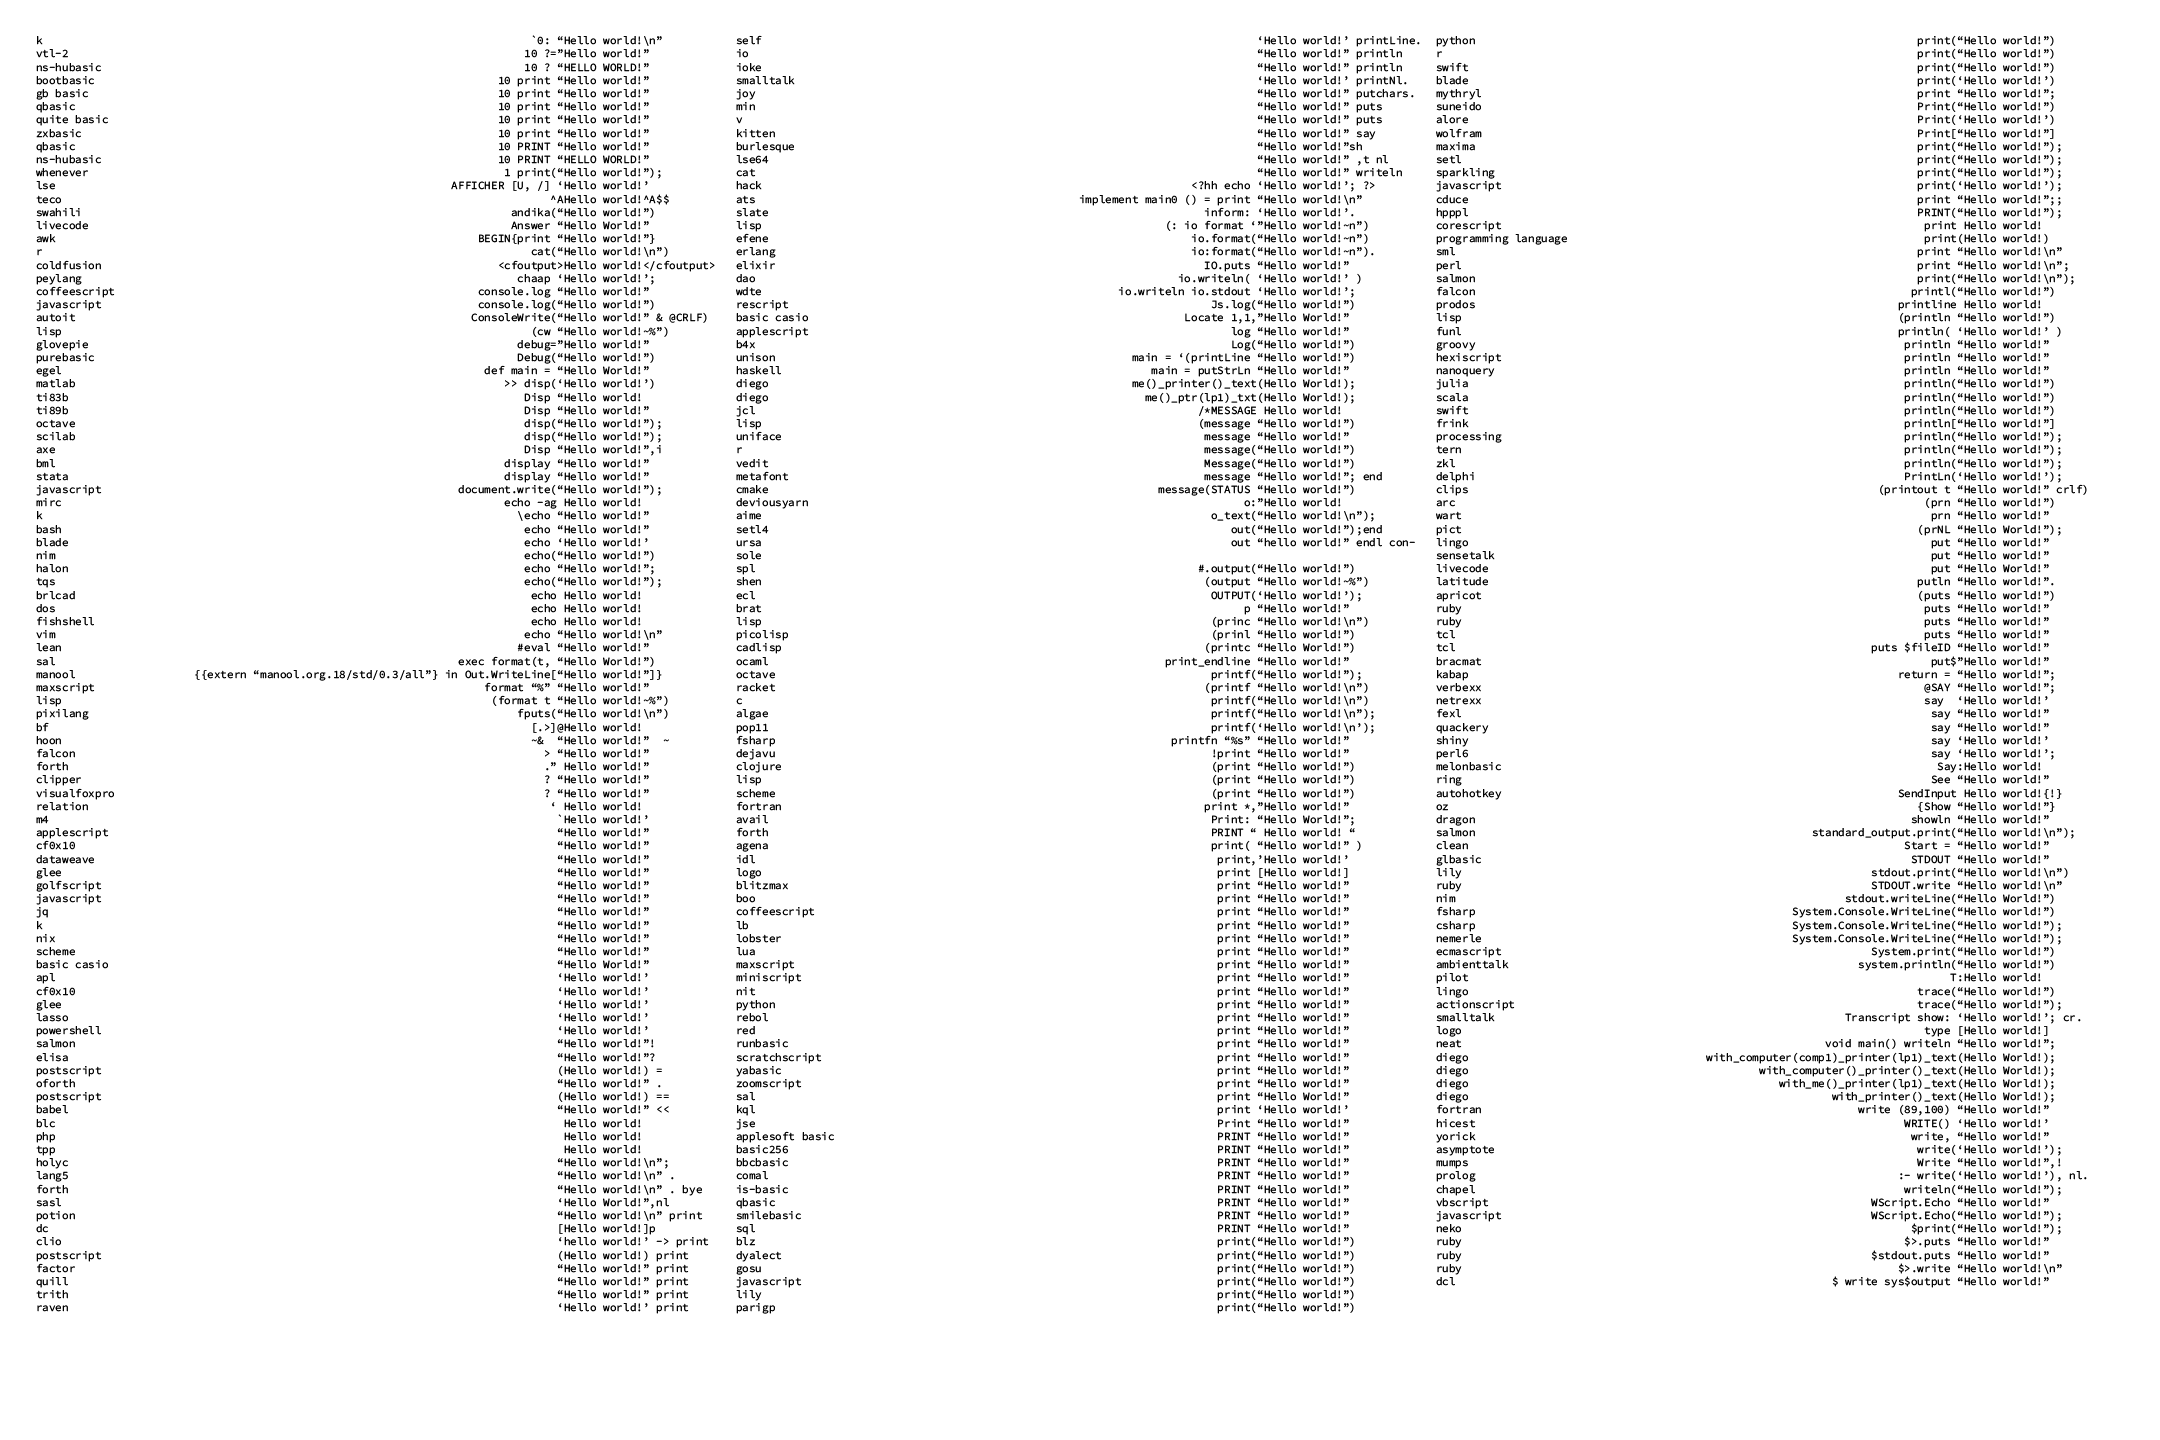 Three columns of Hello World programs from Rosetta Code